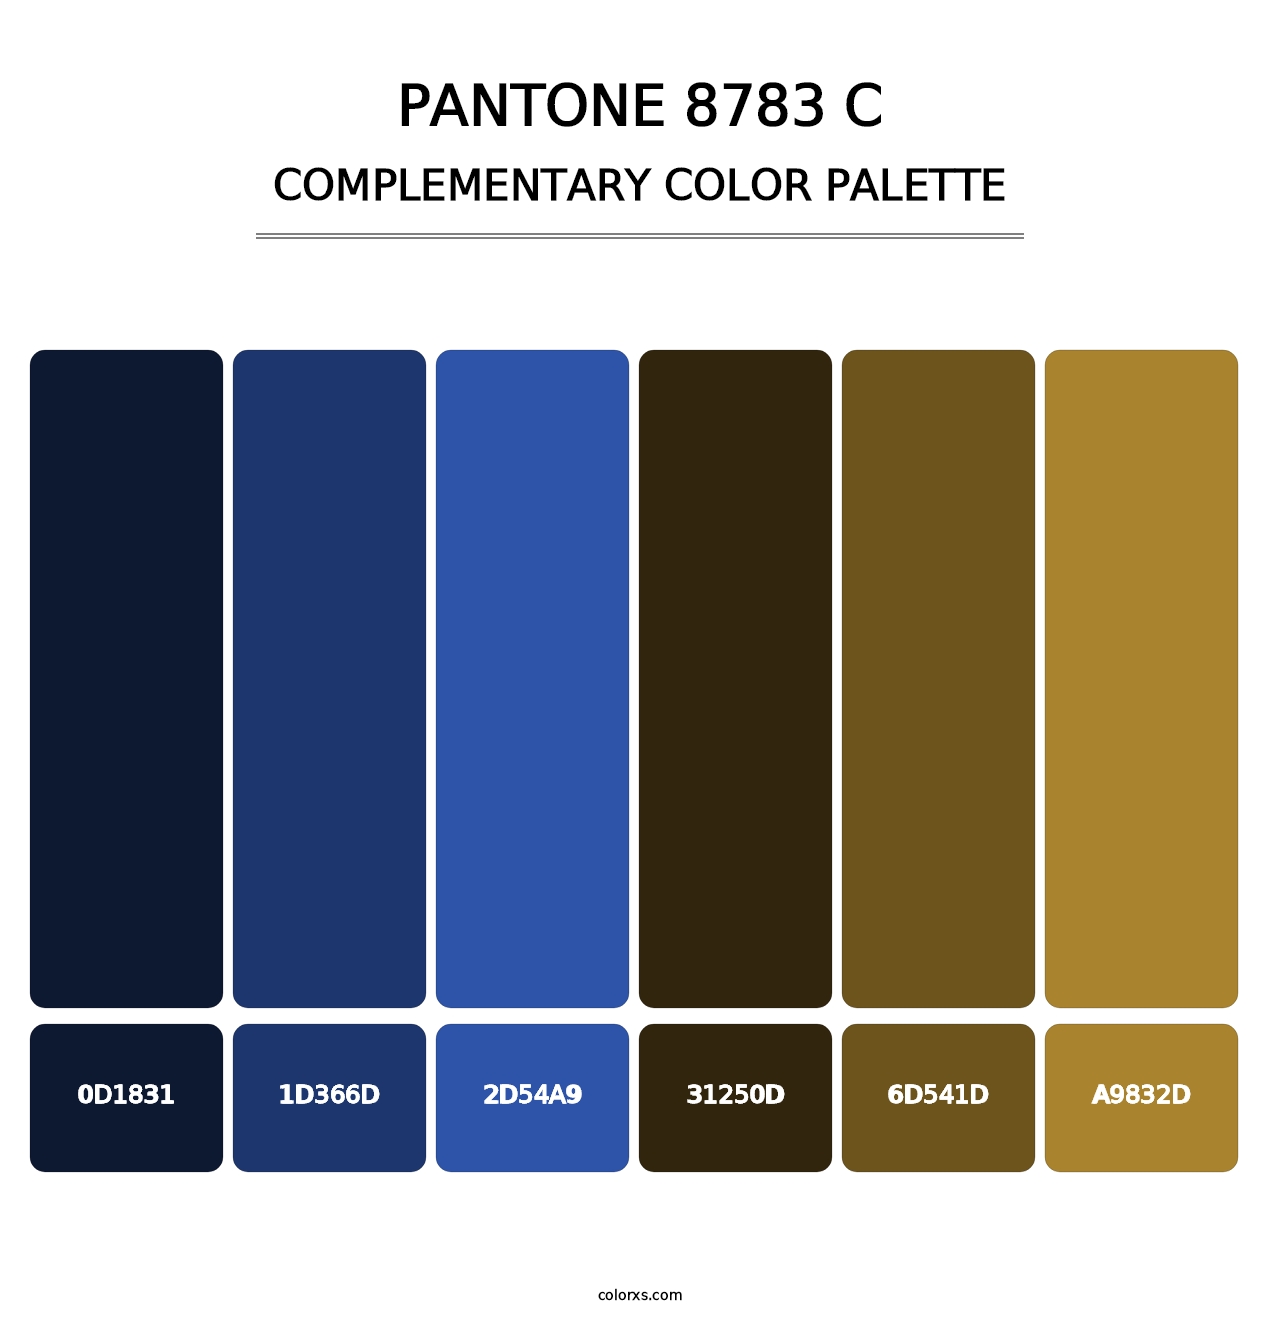 PANTONE 8783 C - Complementary Color Palette